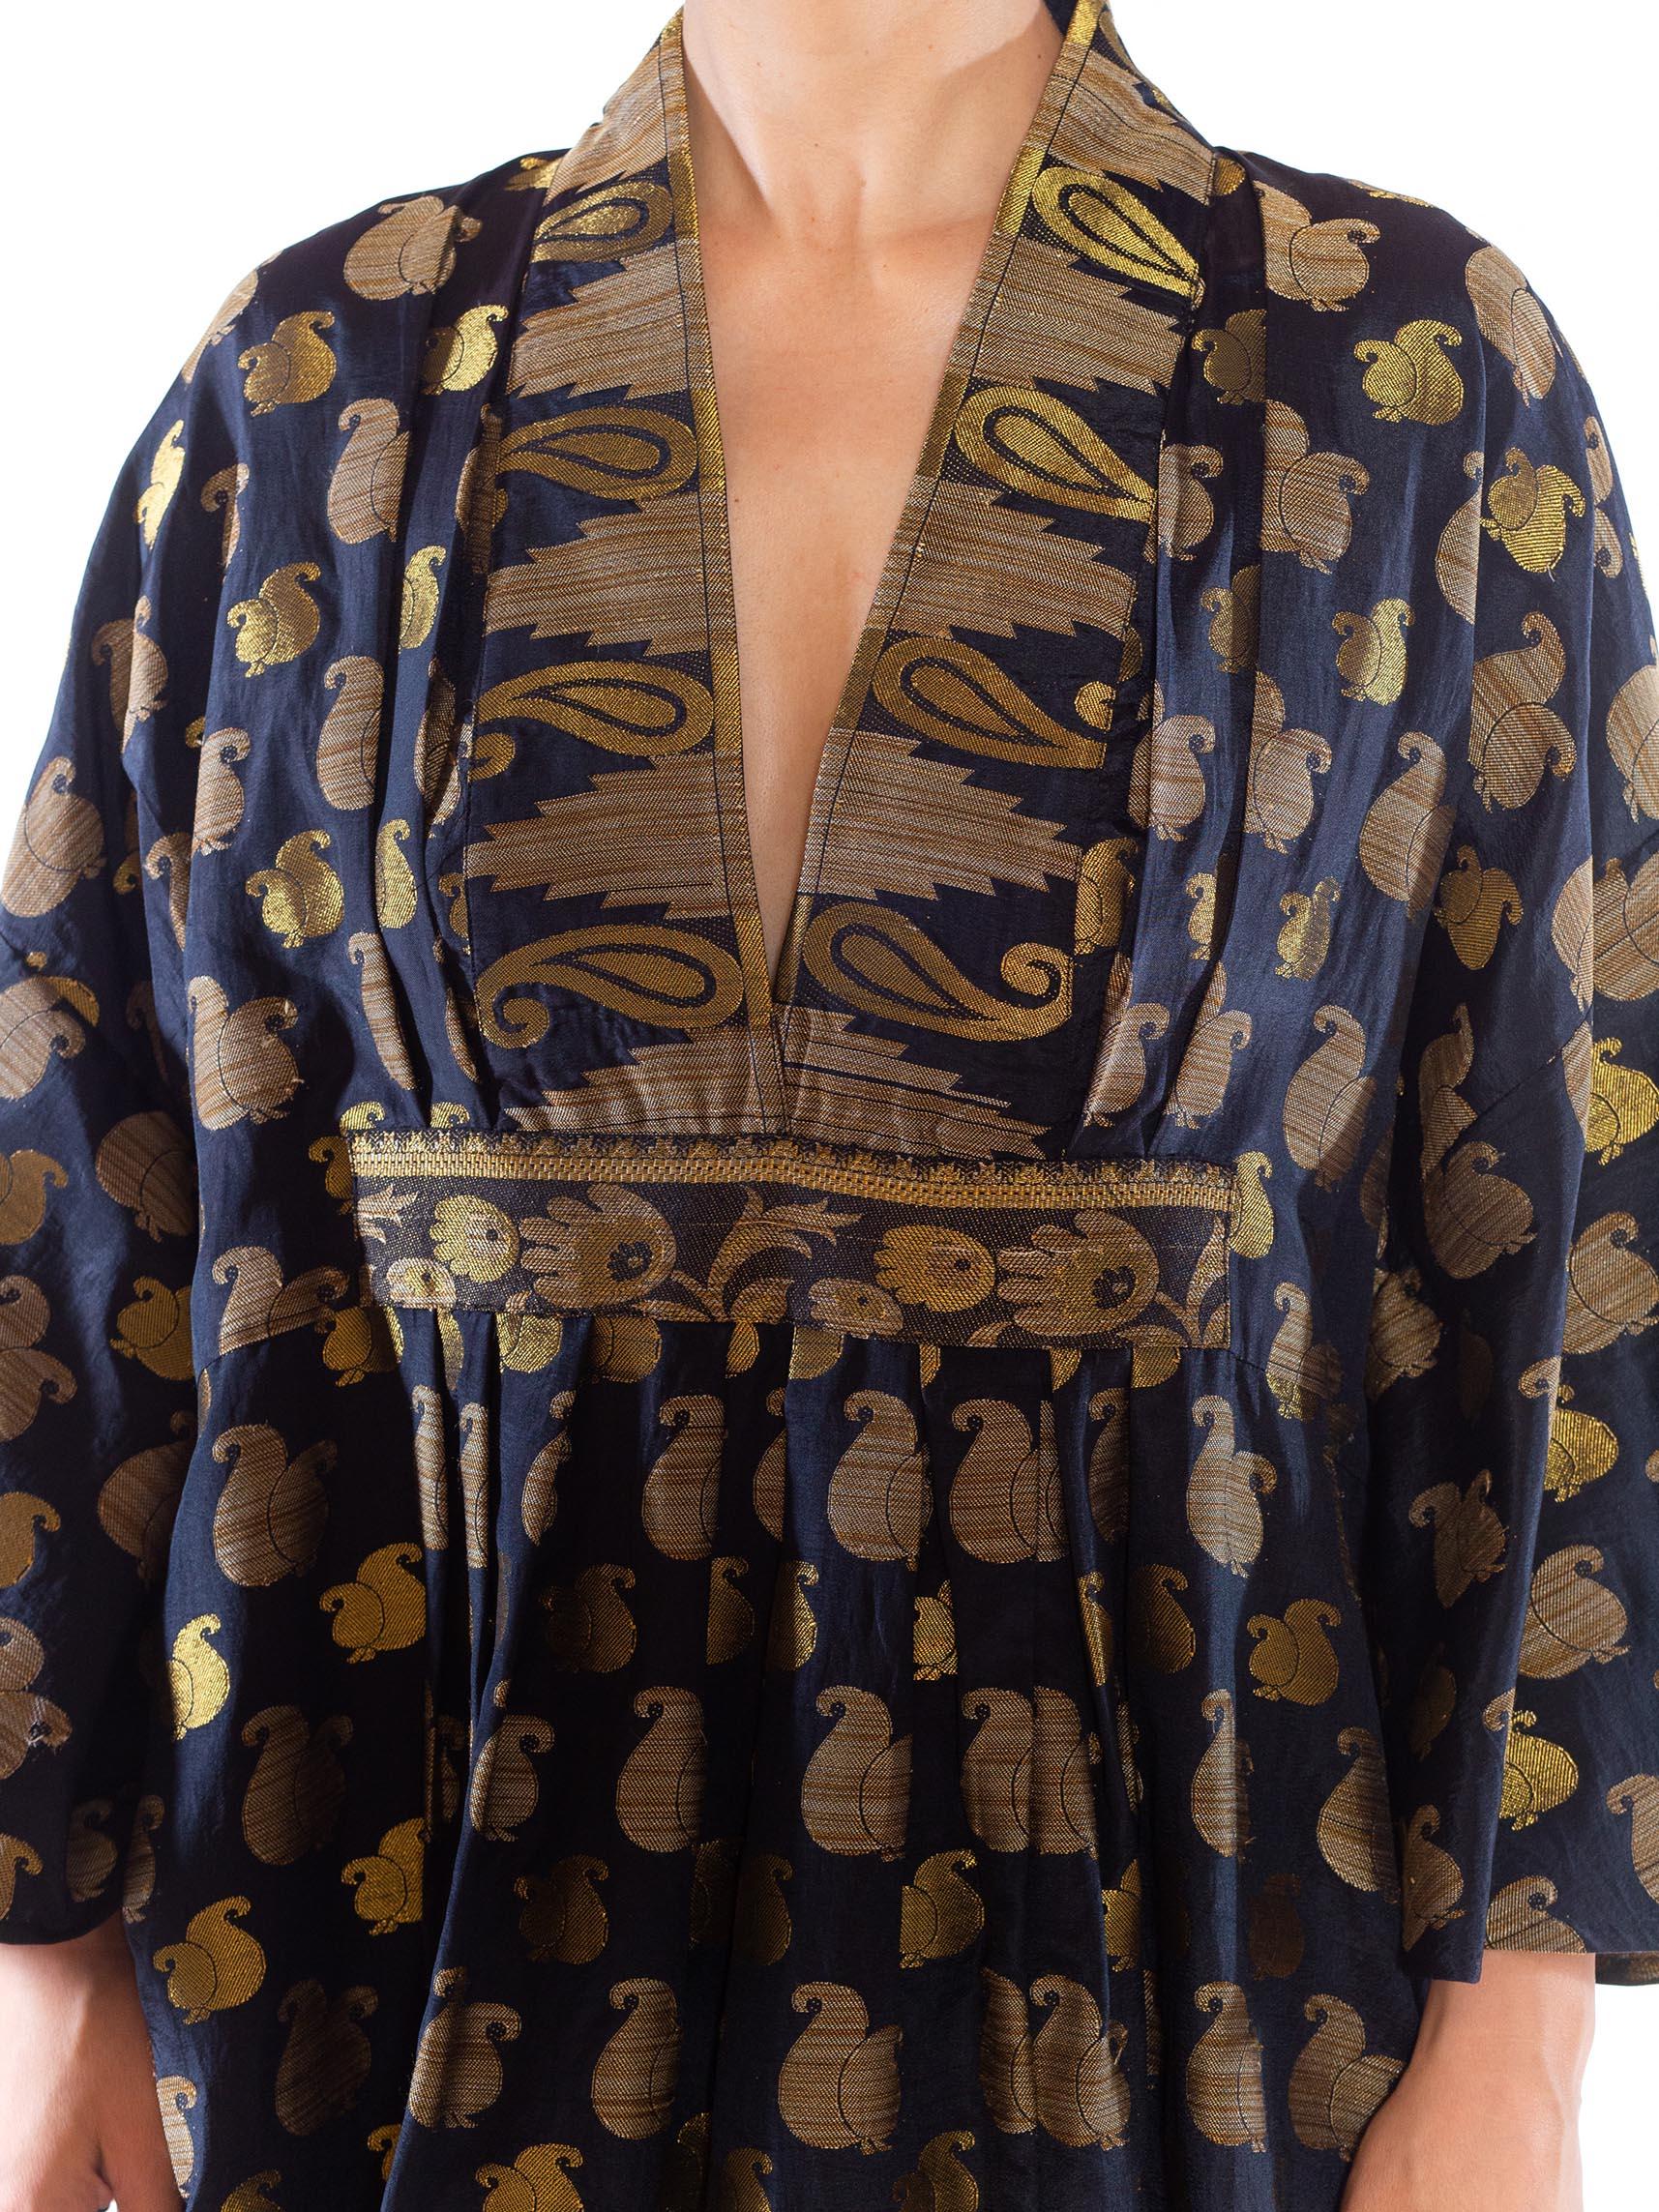 MORPHEW COLLECTION Black & Gold Metallic Silk Kaftan Made From Vintage Saris For Sale 5